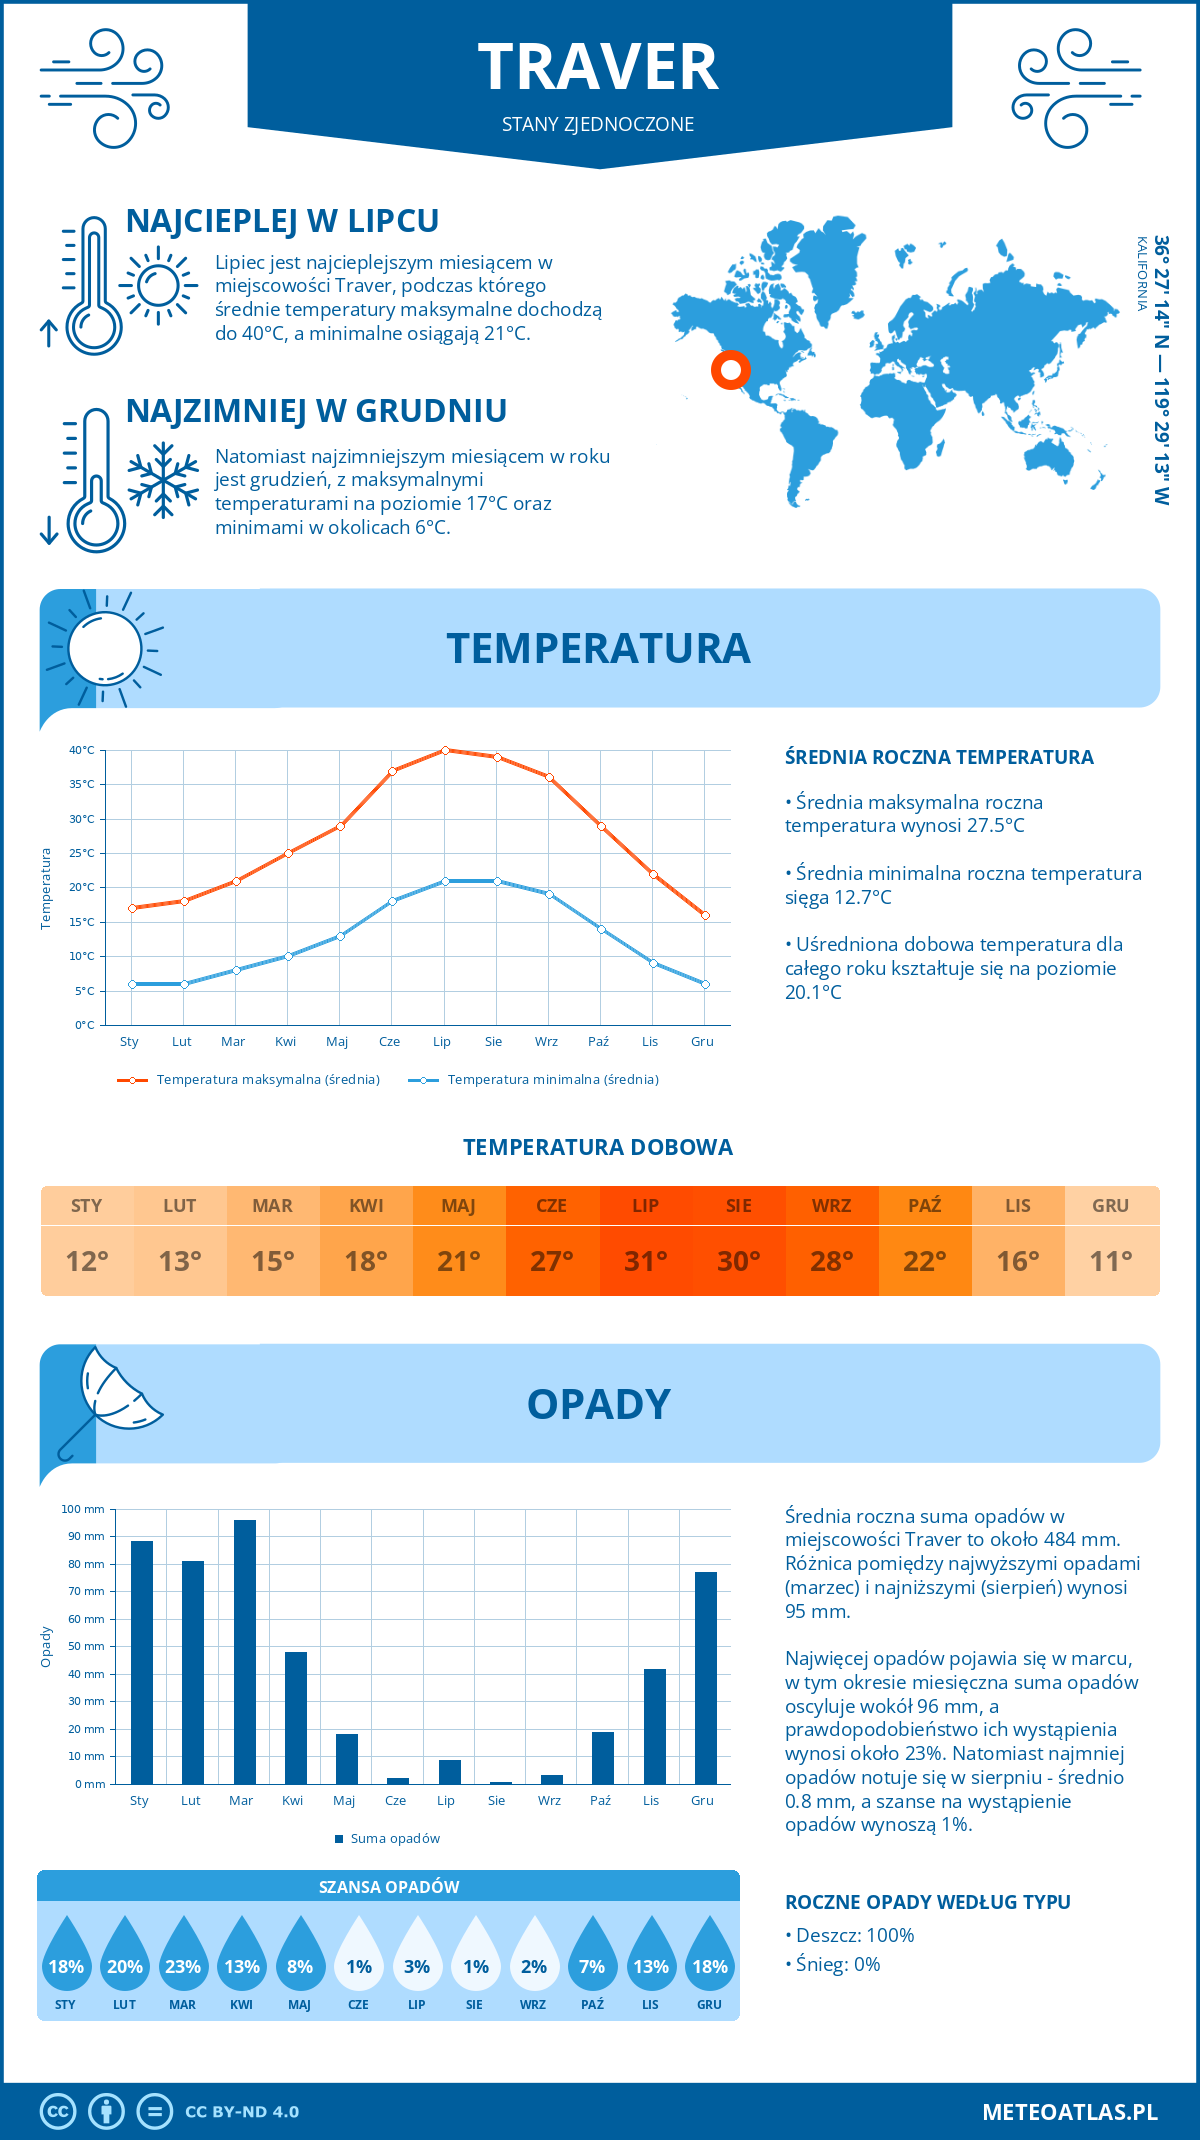 Pogoda Traver (Stany Zjednoczone). Temperatura oraz opady.